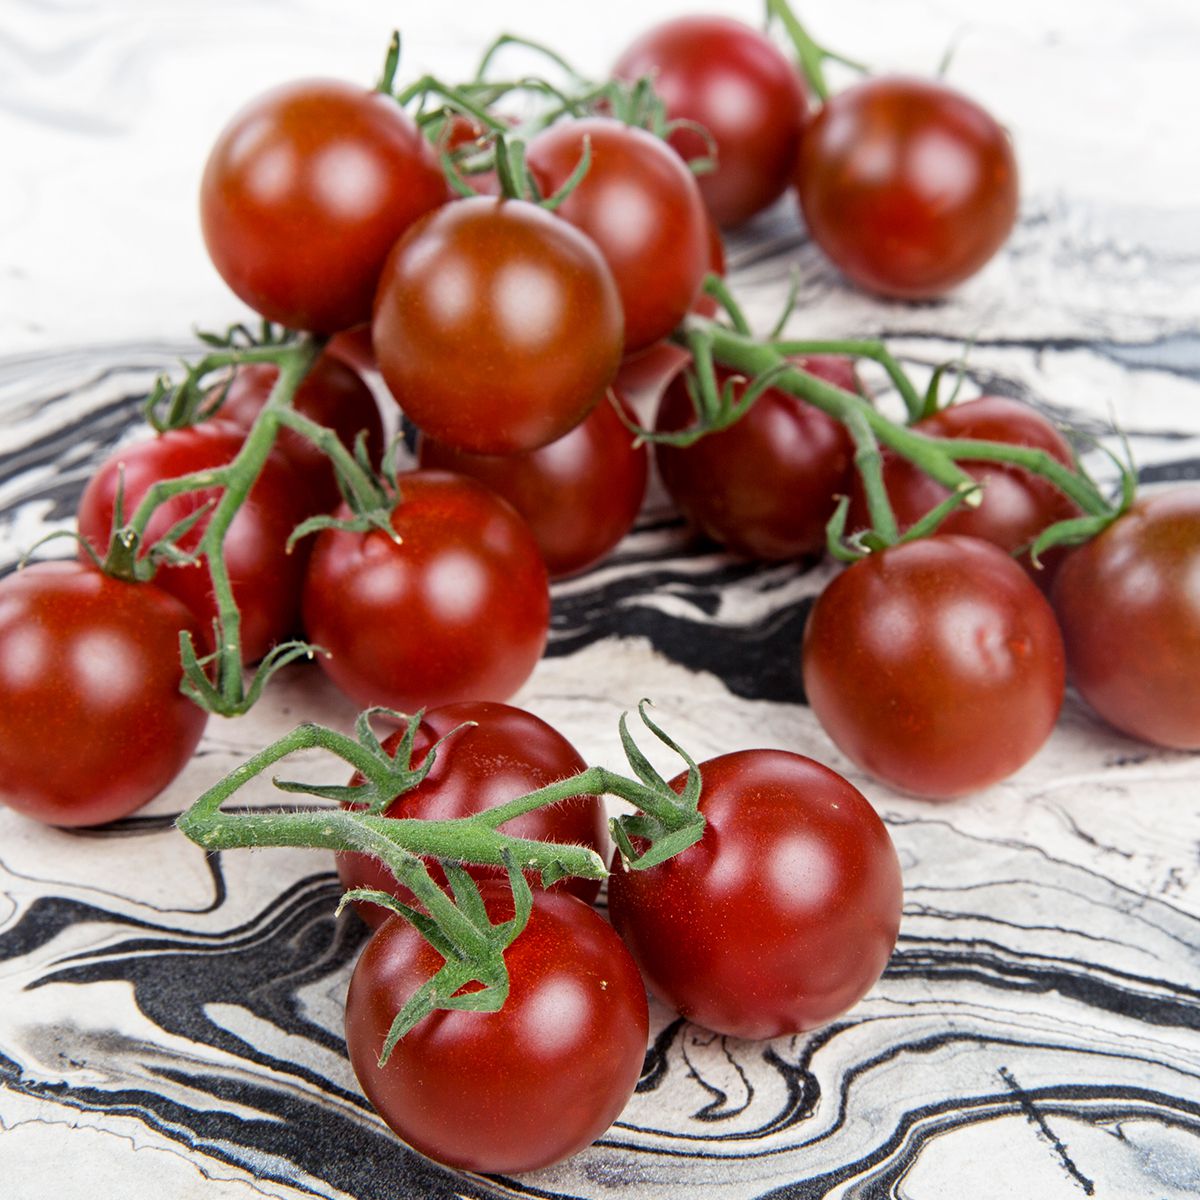 BoxNCase Organic Cherry Tomatoes 1 PT